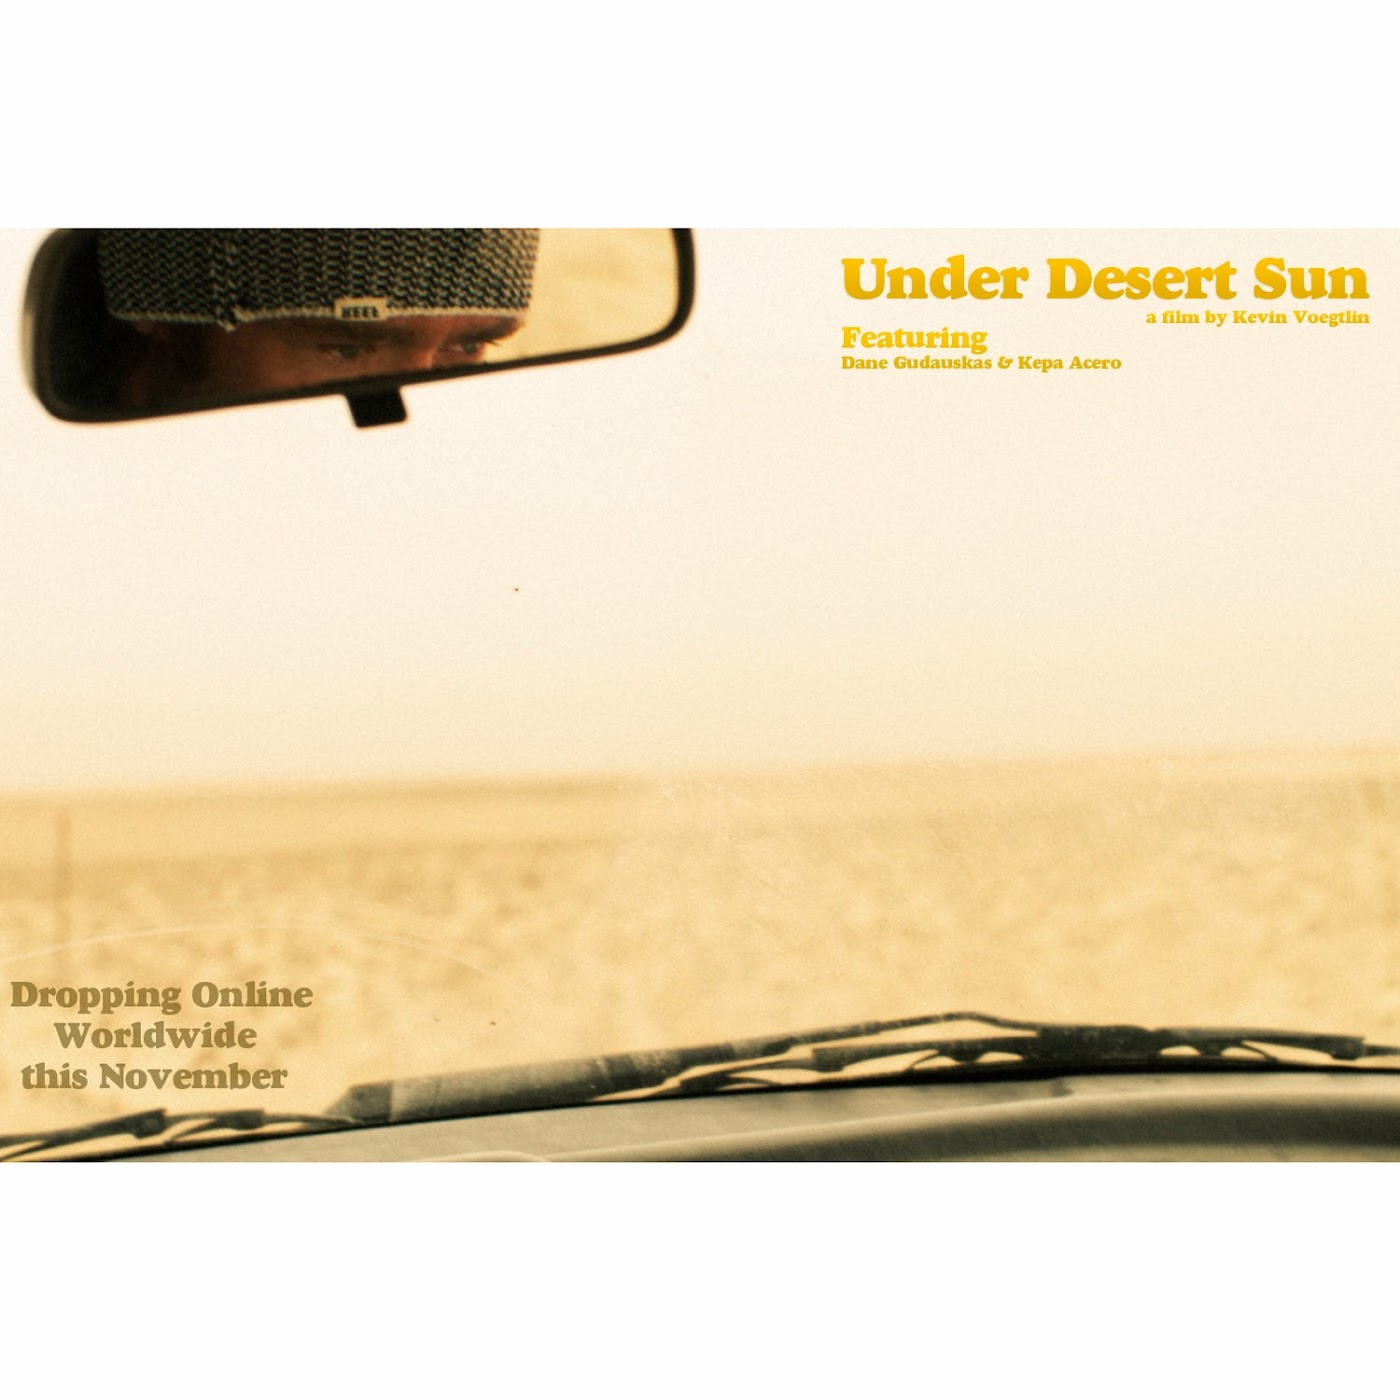 Under Desert Sun premieres in Barcelona | Kepa Acero & Dane Gudauskas in Angola